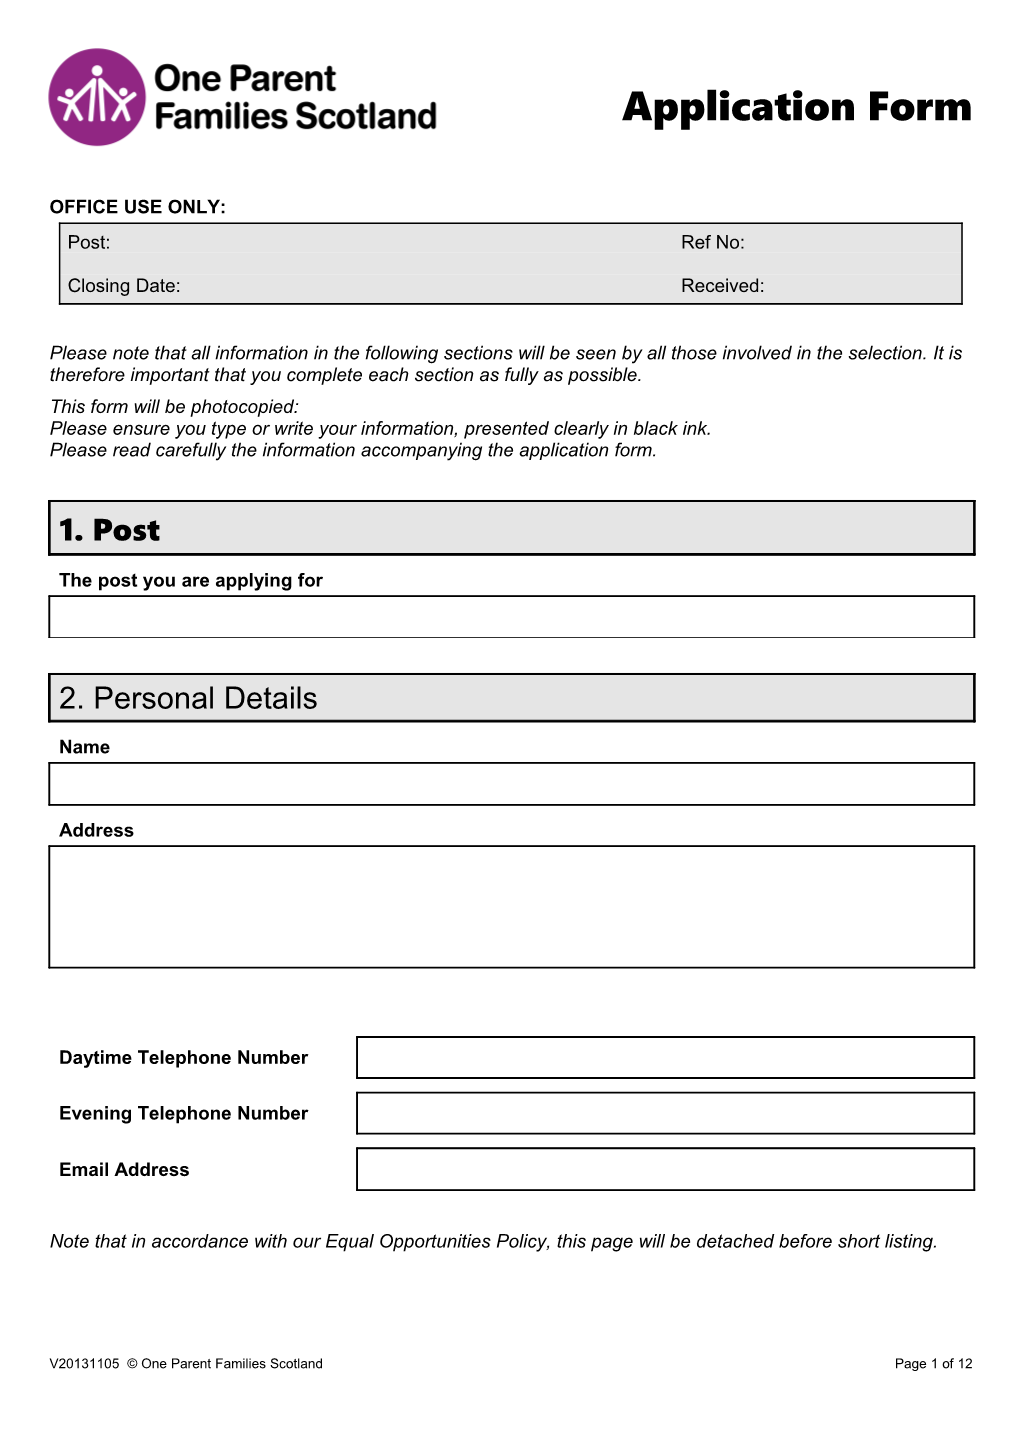 OPFS Application Form